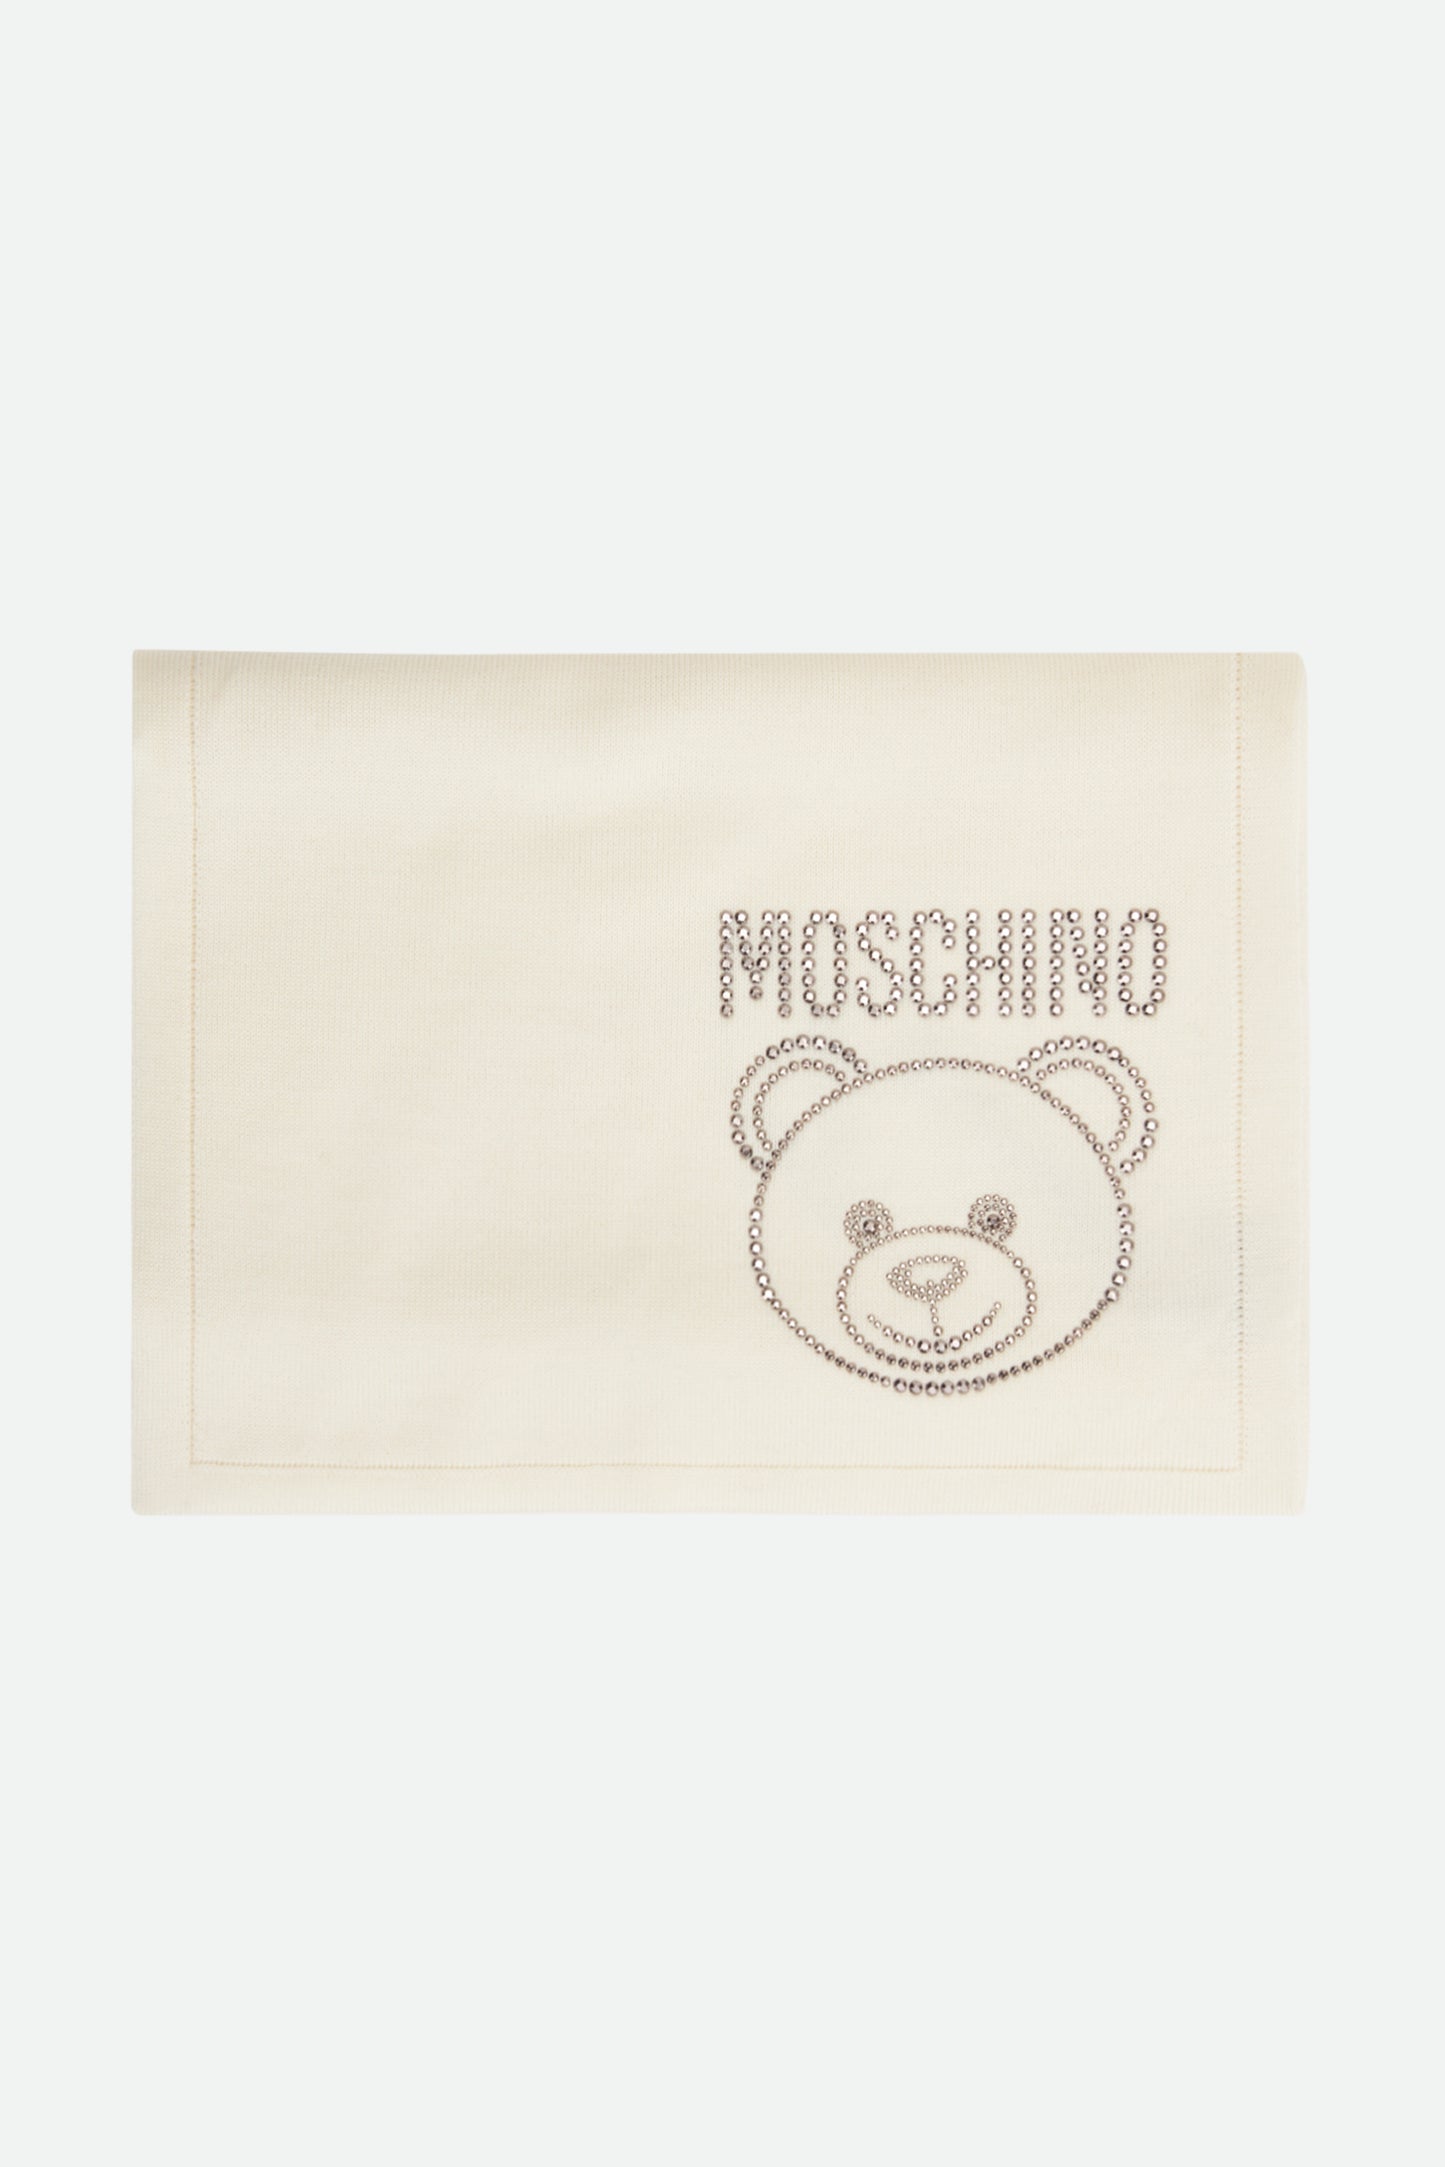 Moschino White Wool Scarf